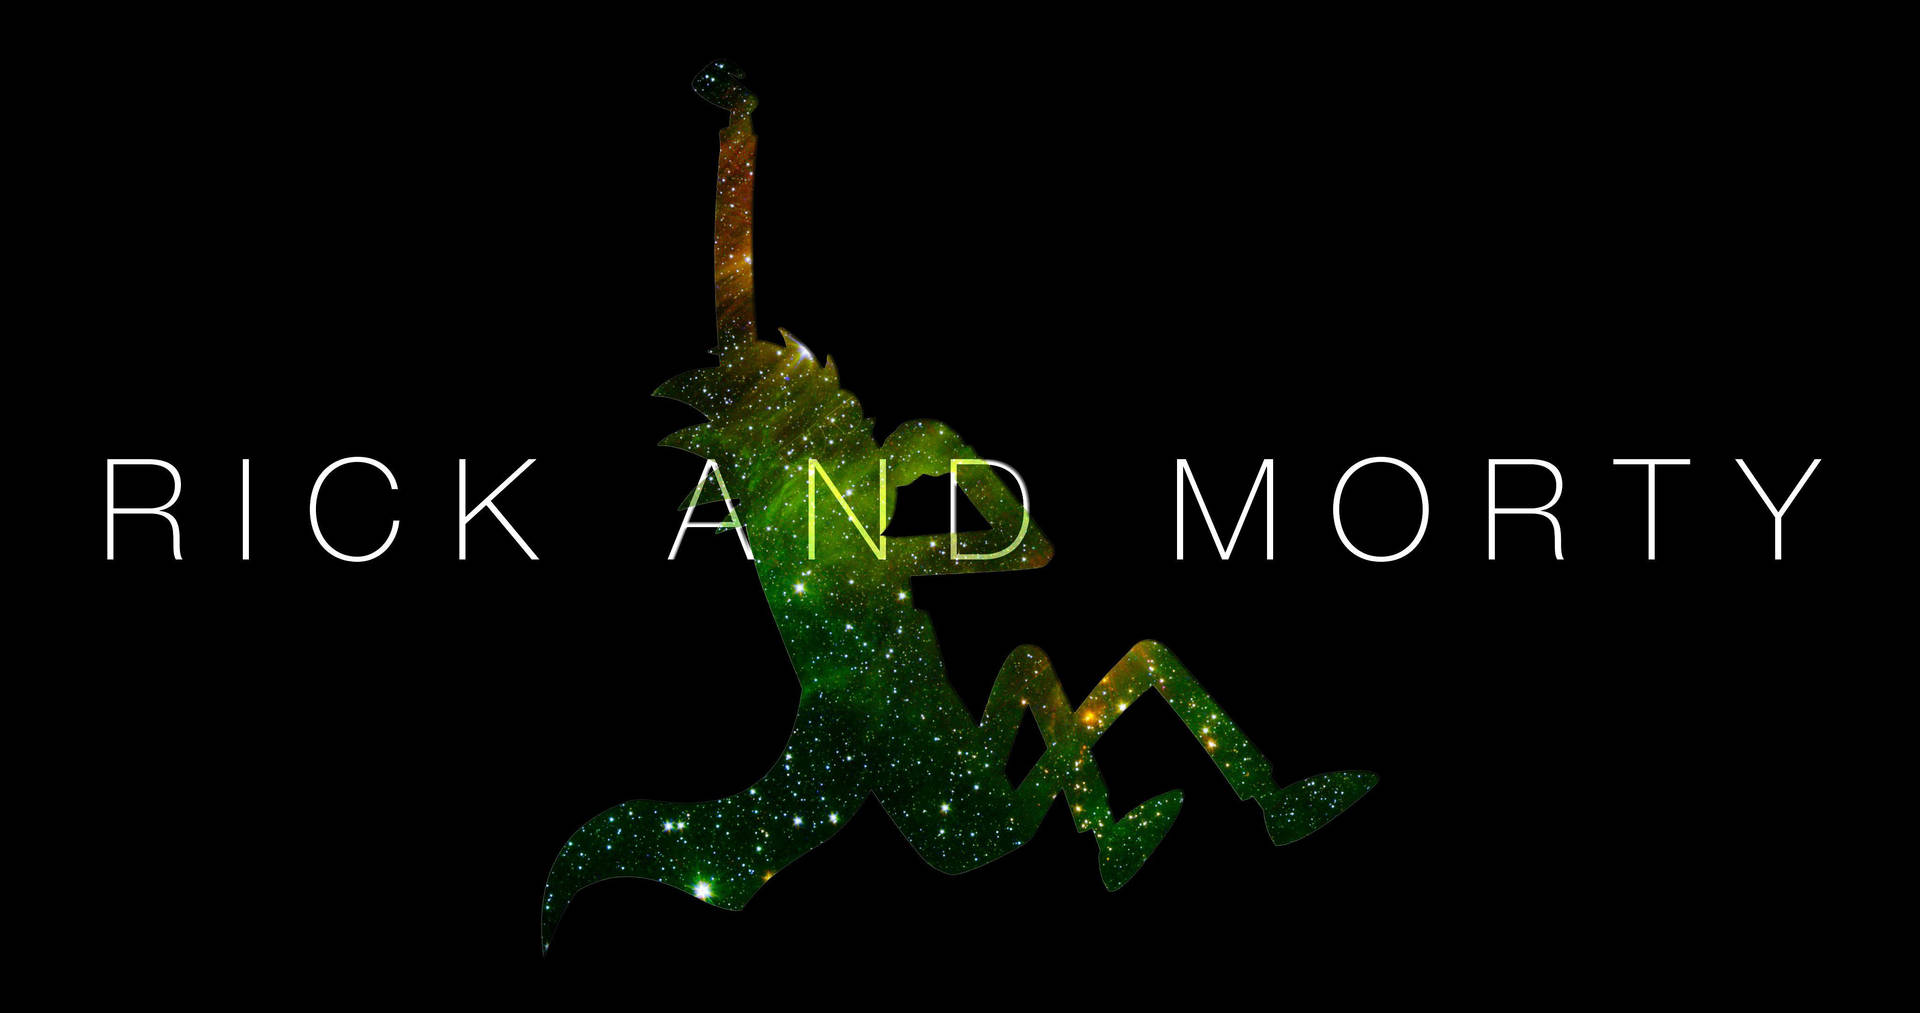 Black Minimalist Rick And Morty 4k Background